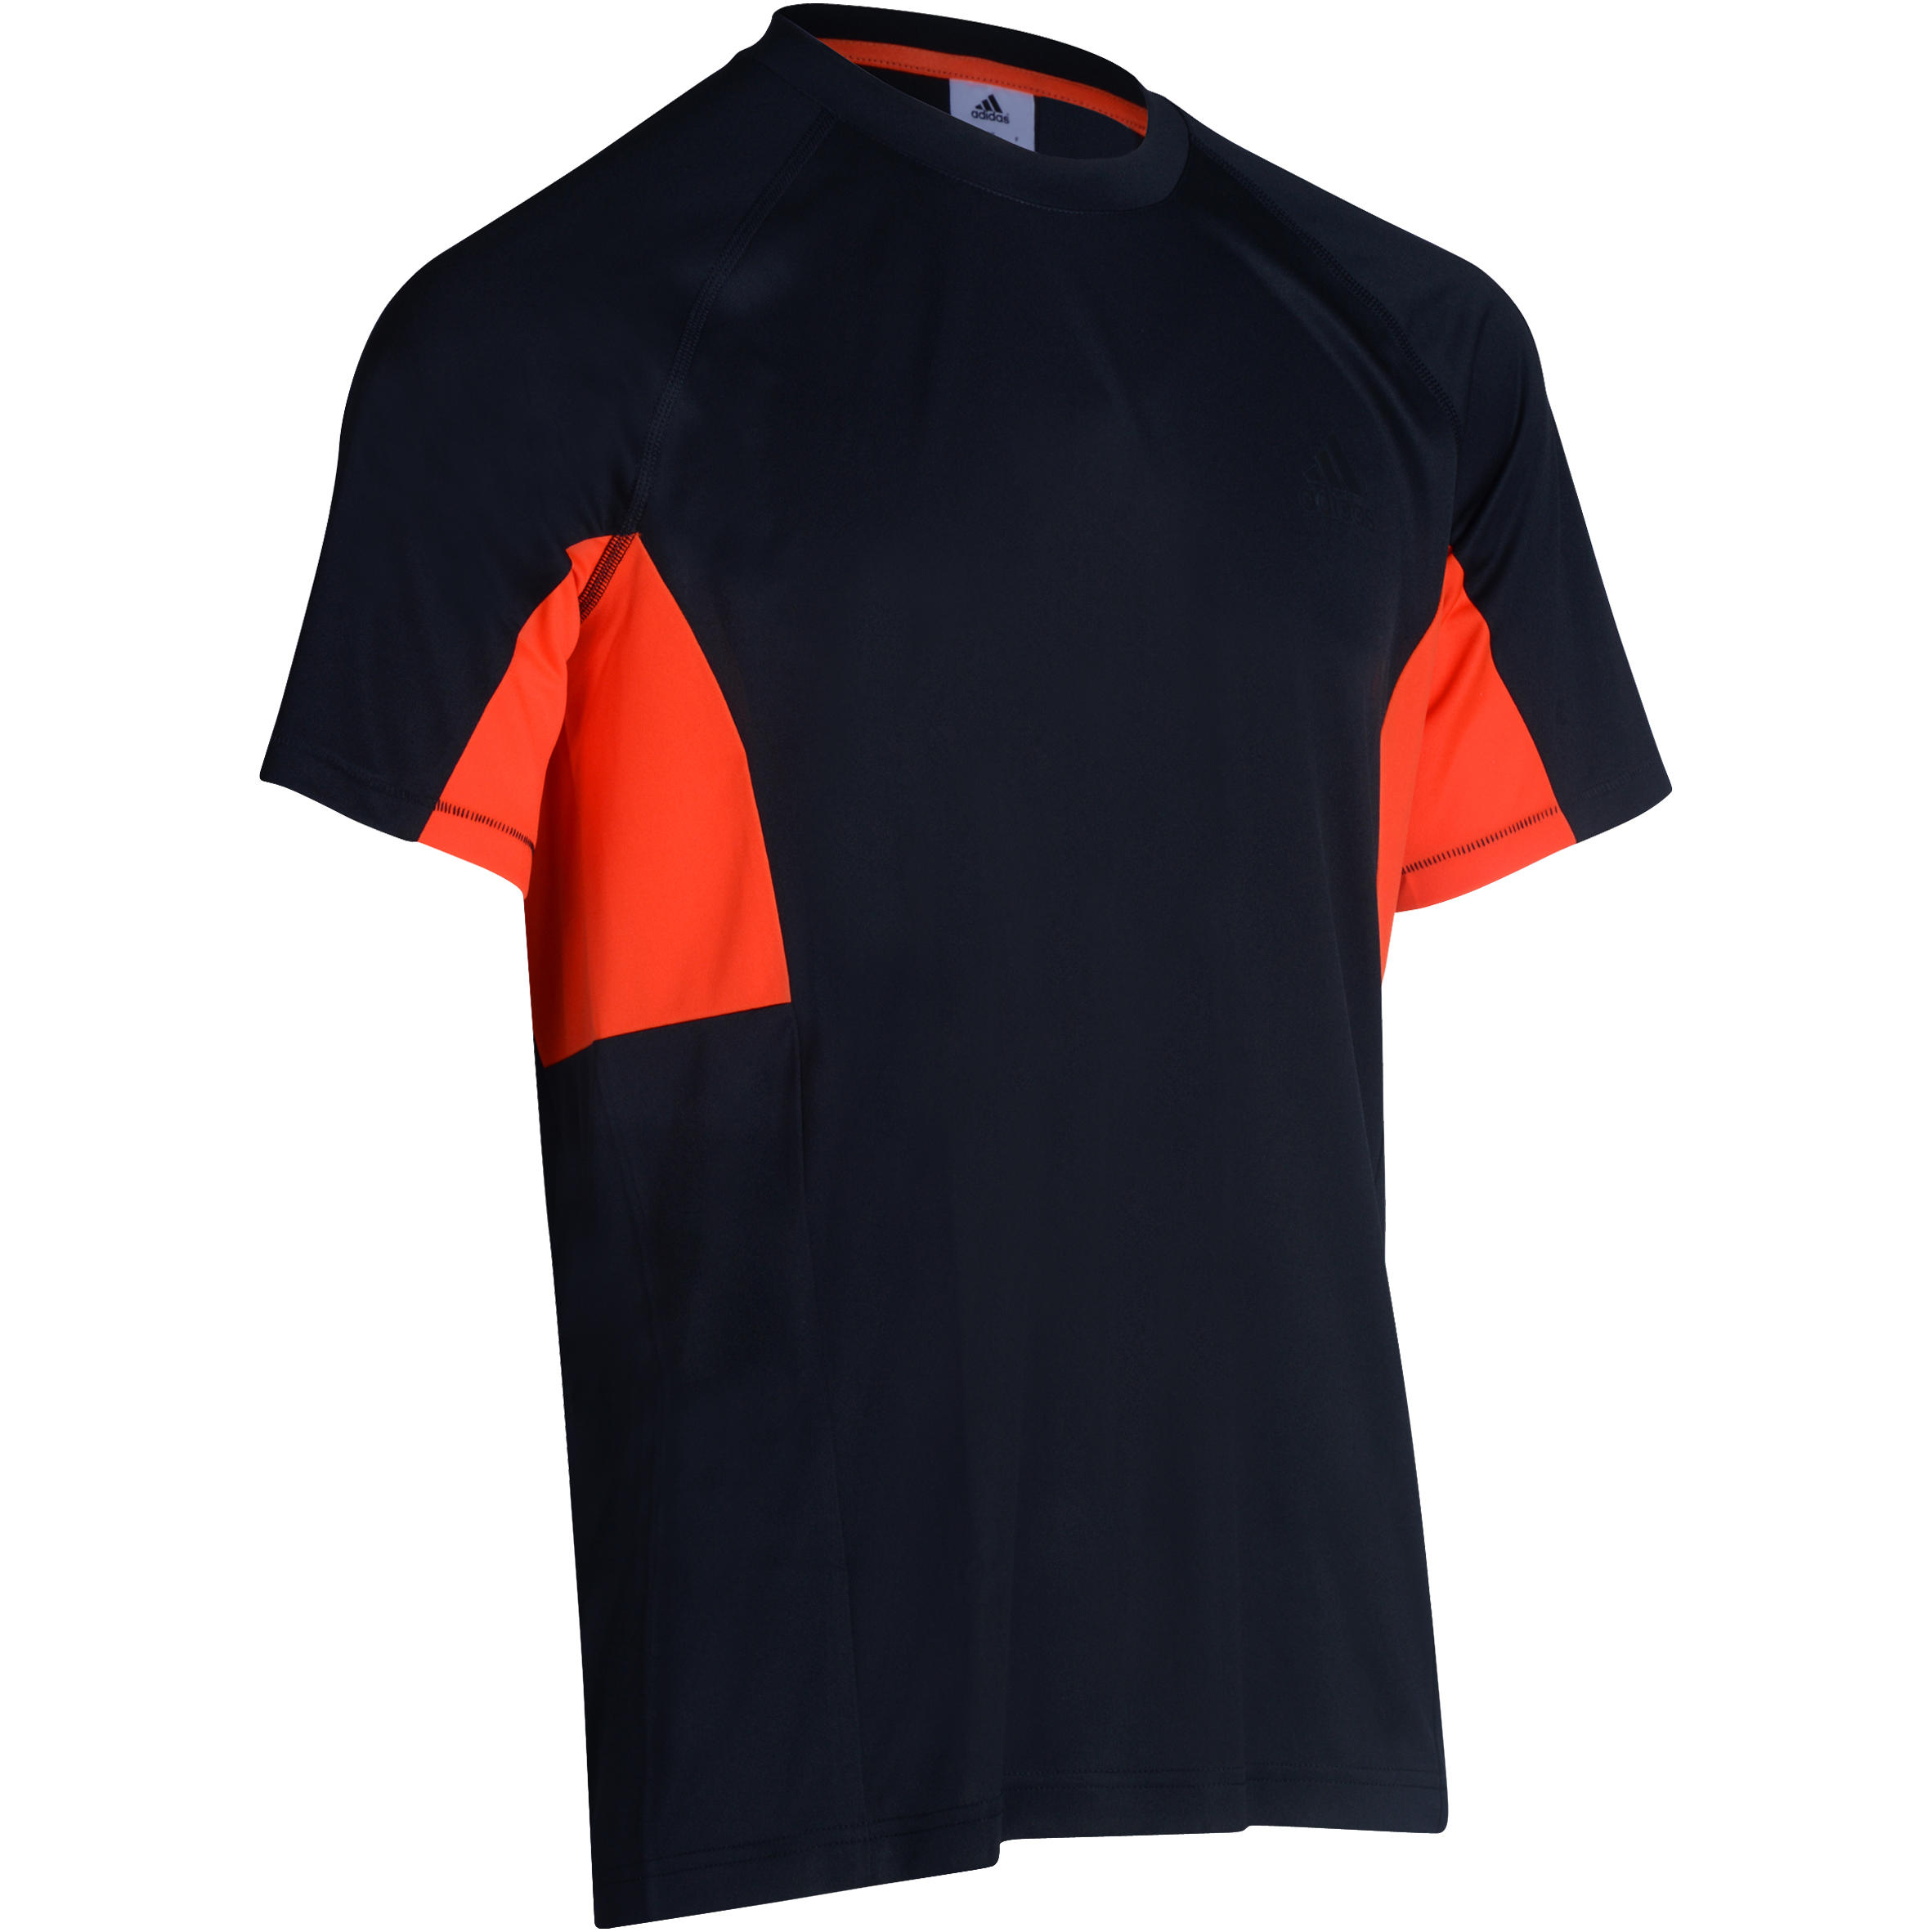 ADIDAS Fitness T-Shirt - Black/Orange